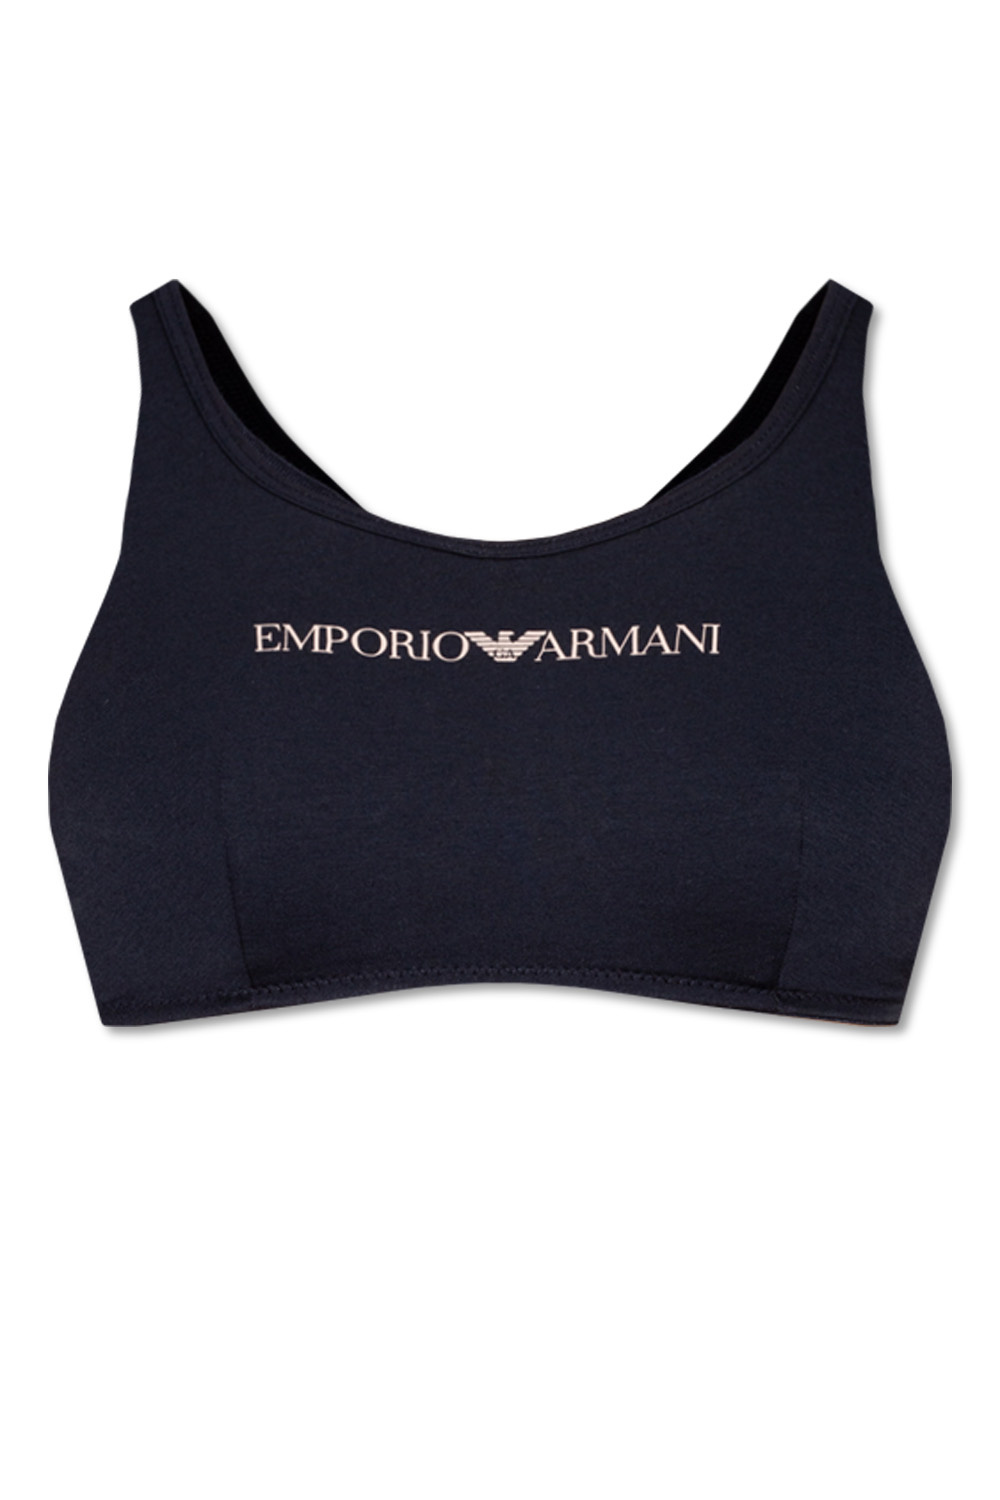 Emporio Armani Sports bra with logo